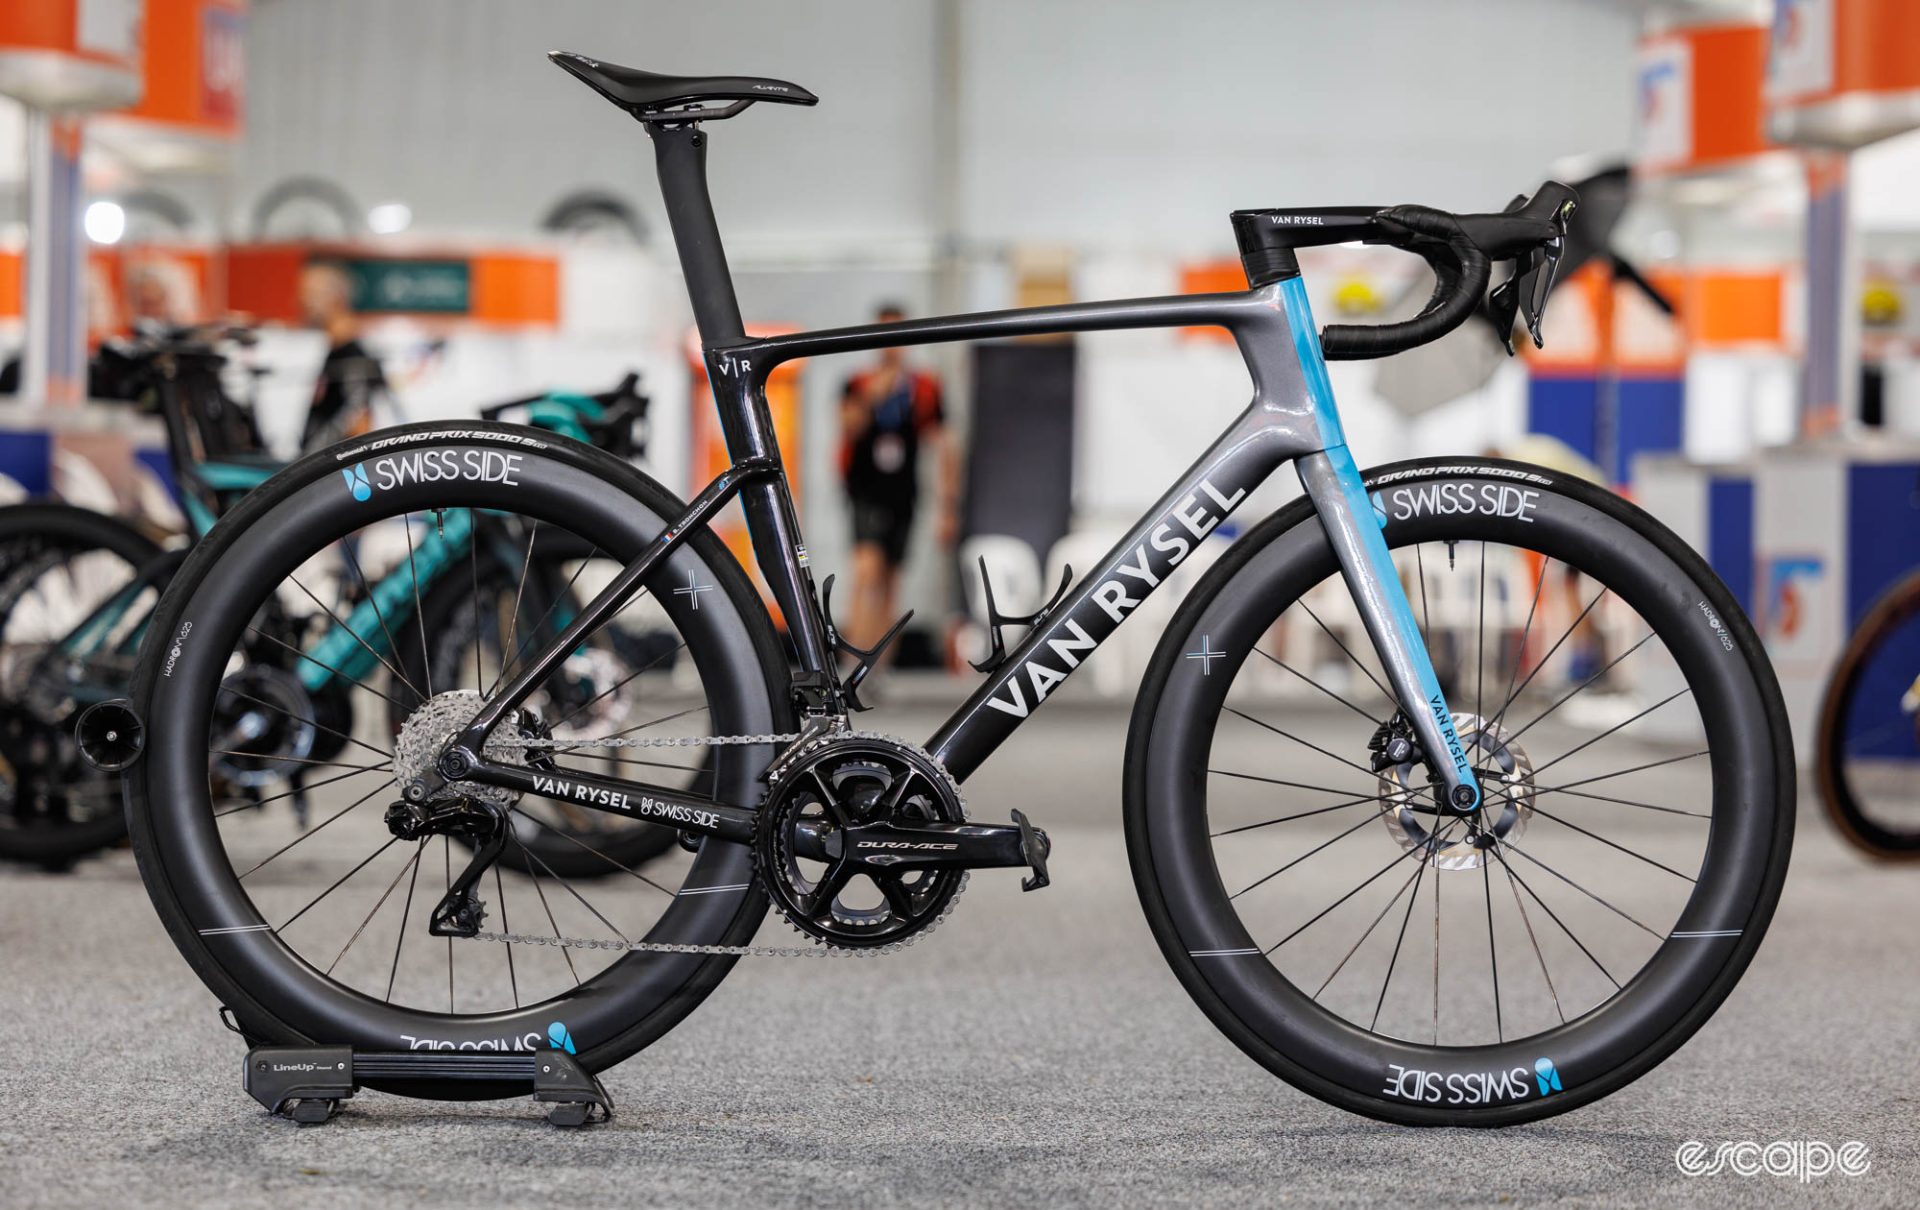 The photo shows Decathlon - AG2R La Mondiale's new Van Rysel RCR bike.